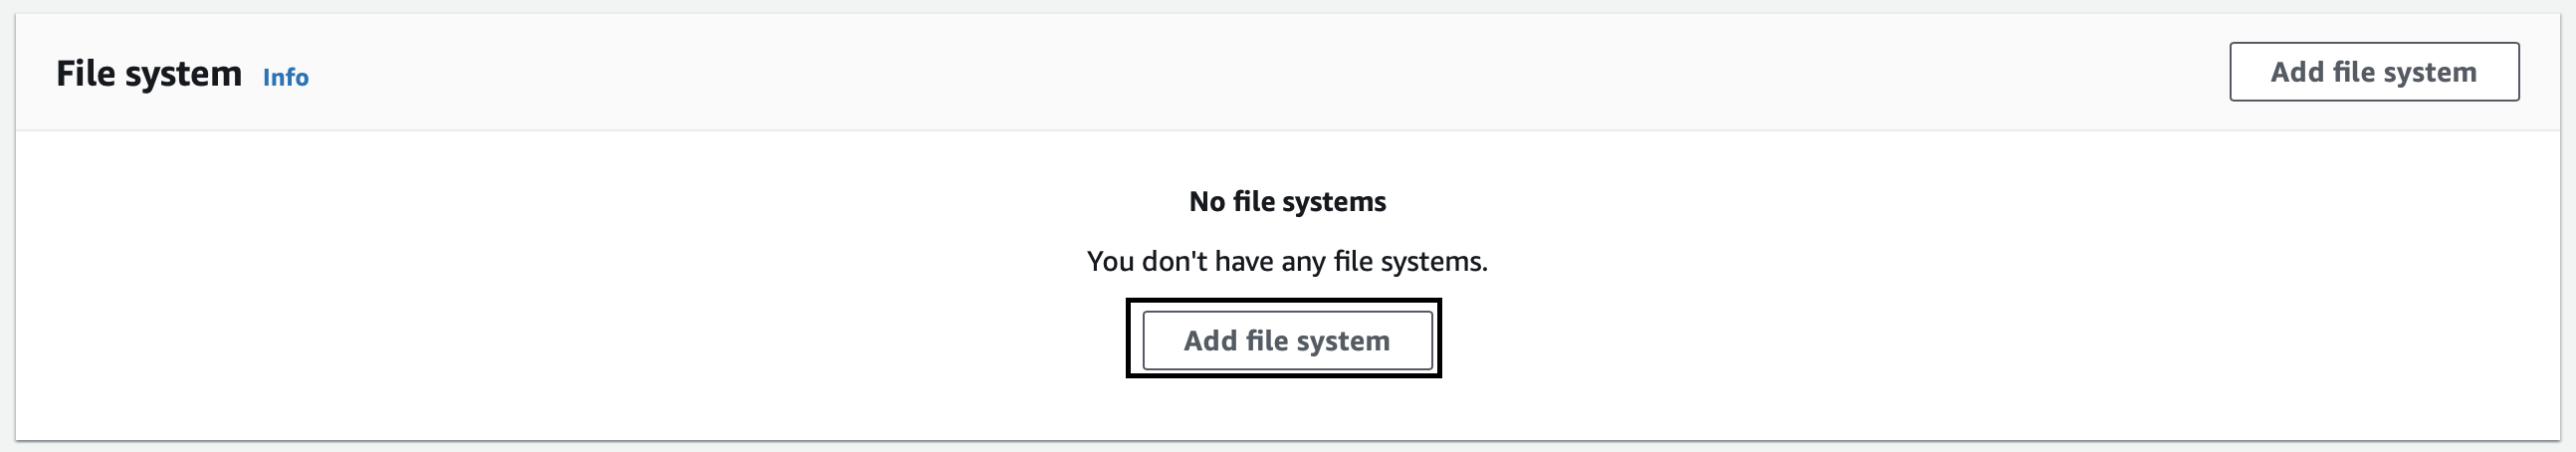 Adding a file system